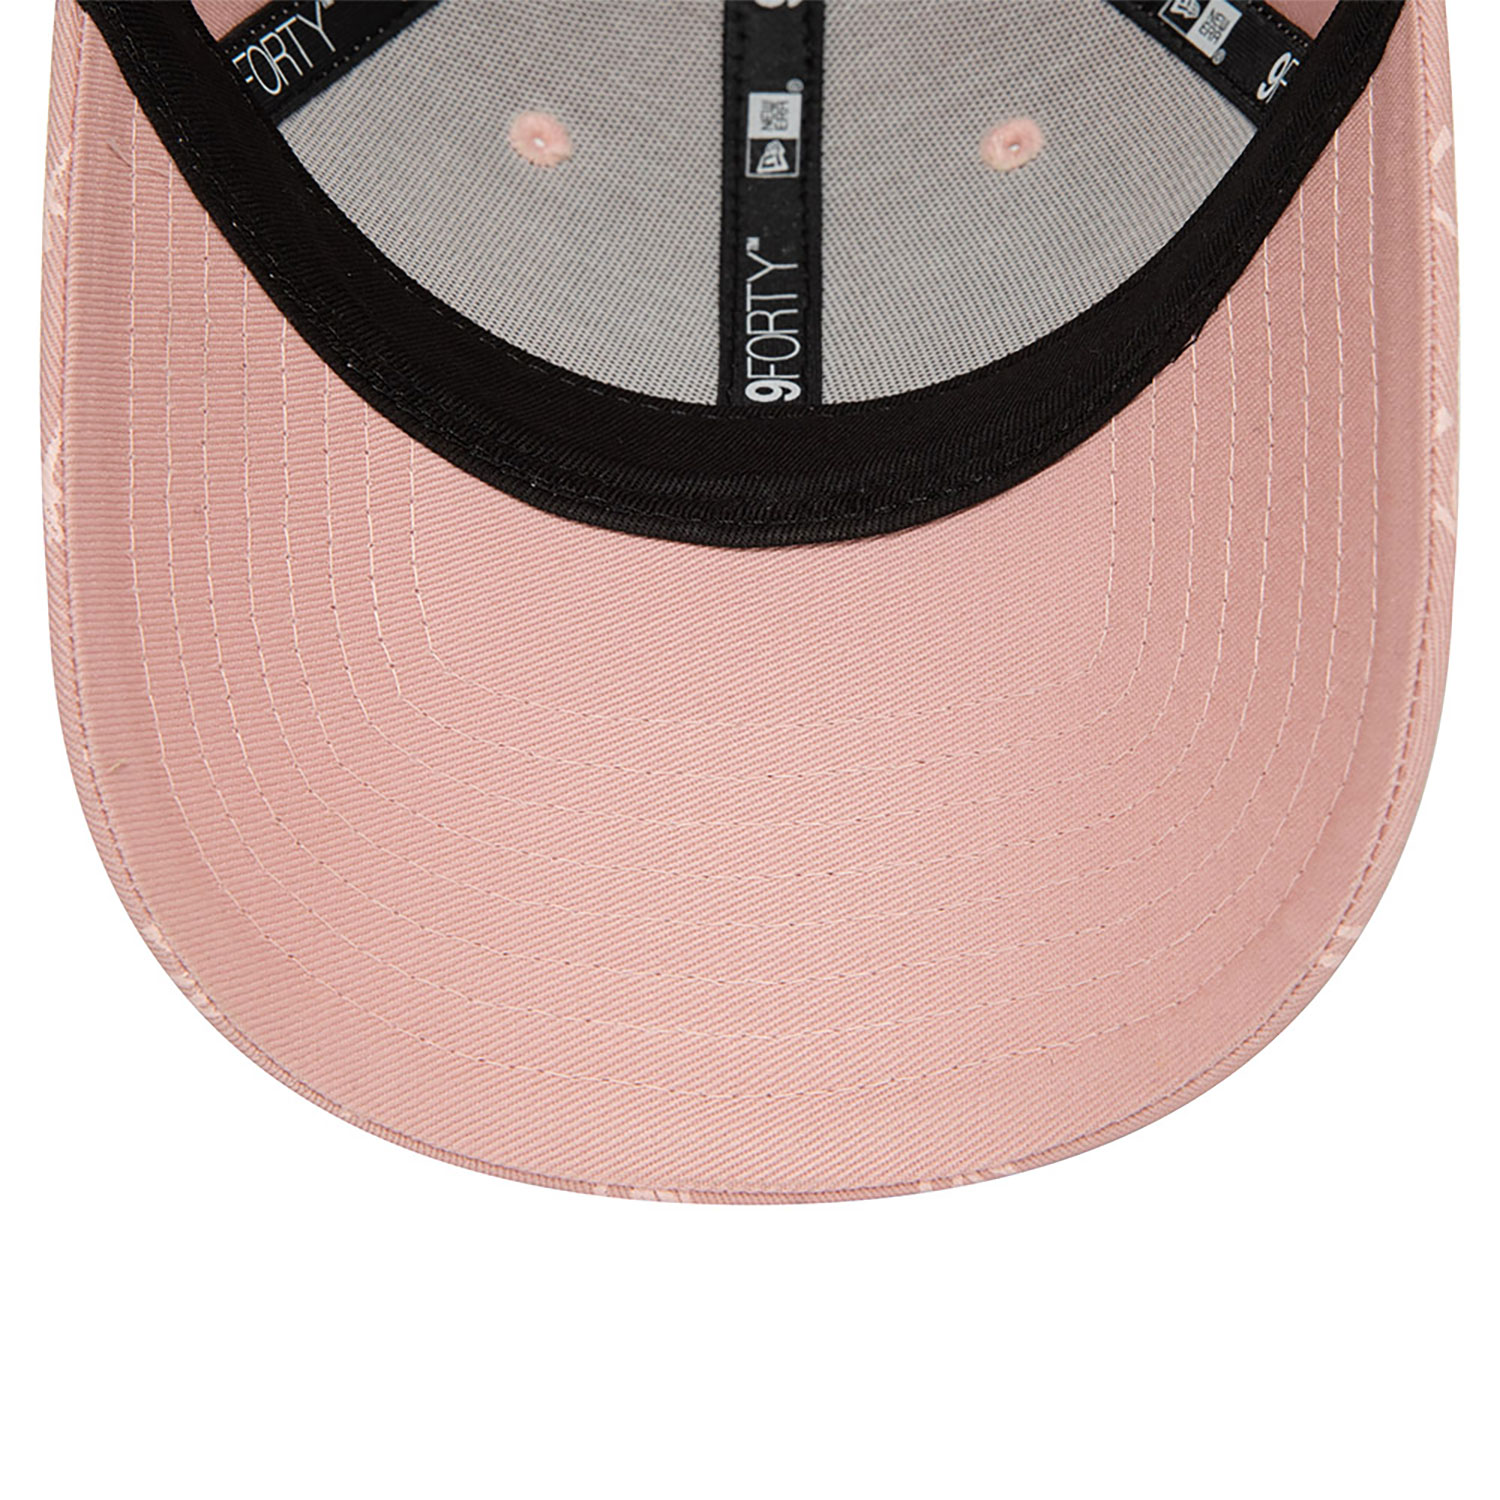 New York Yankees Womens Monogram Pink 9FORTY Adjustable Cap